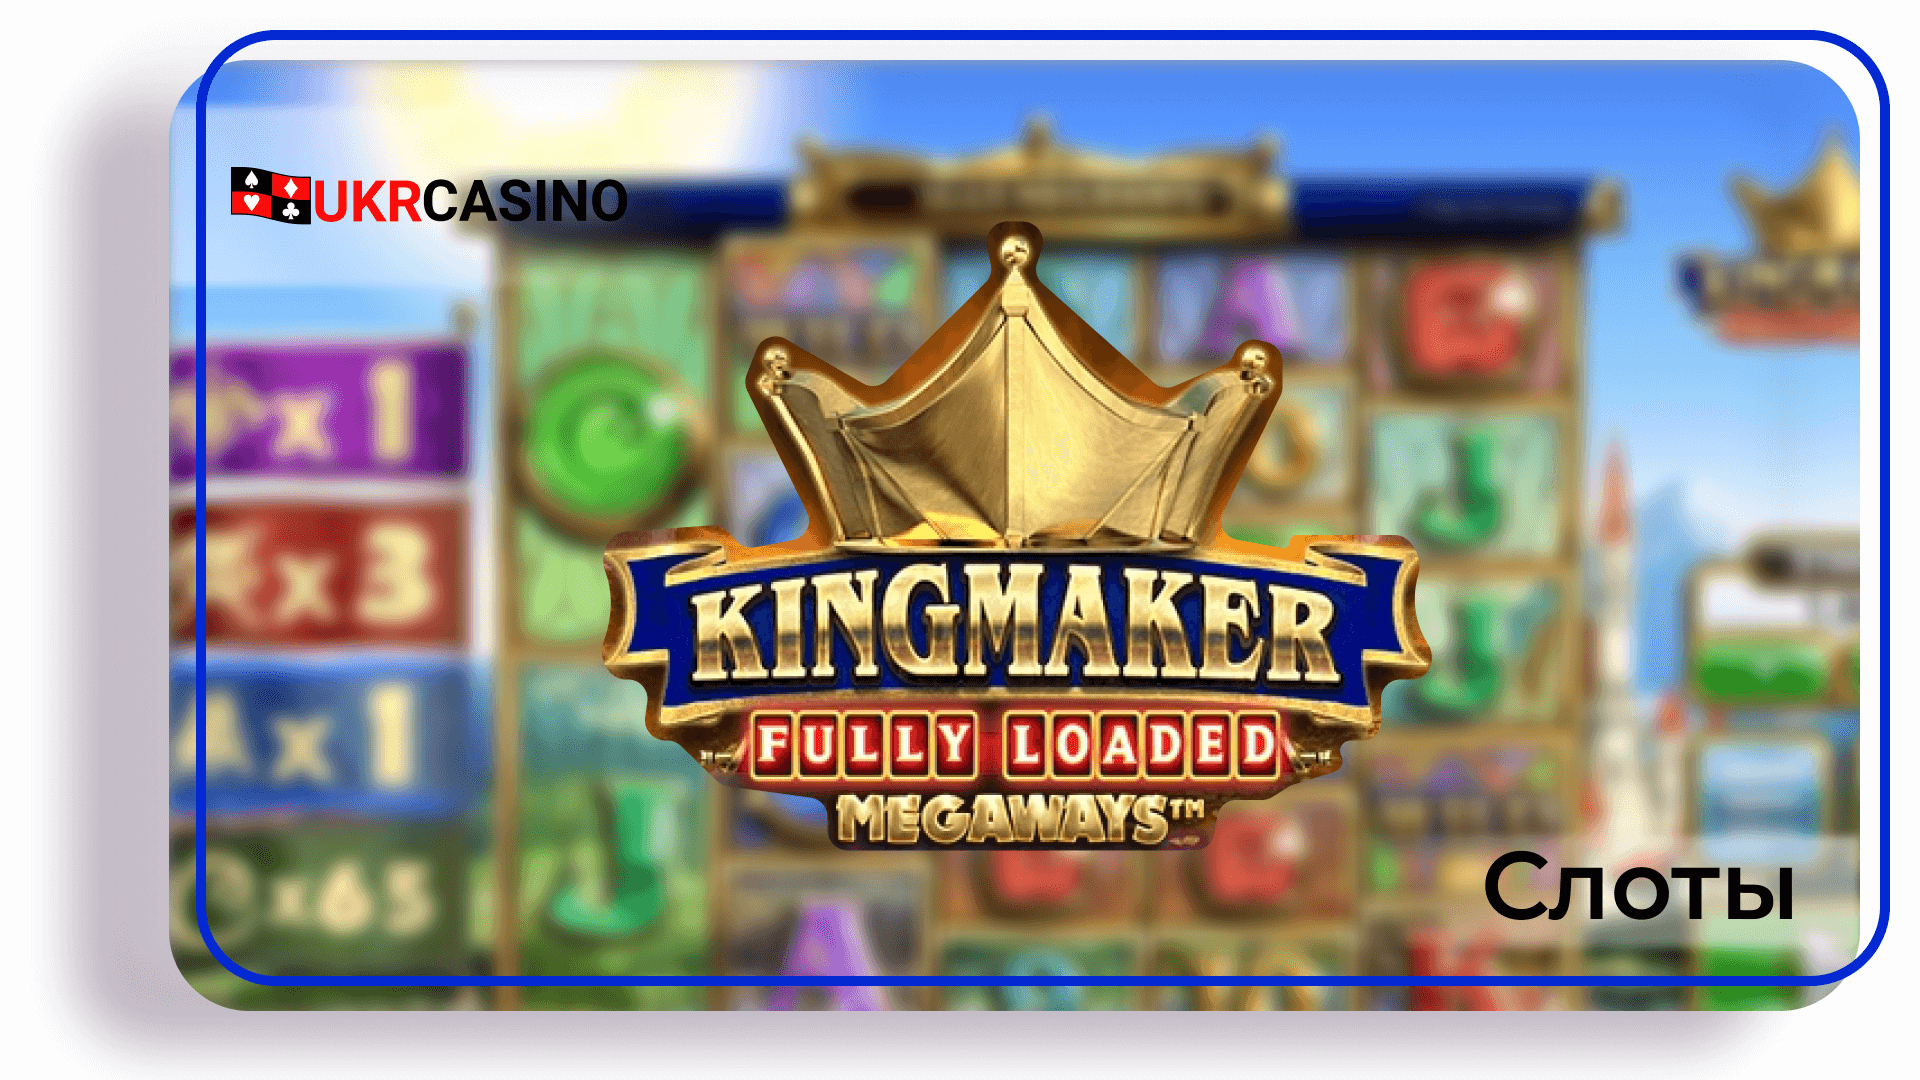 Kingmaker Fully Loaded - Big Time Gaming